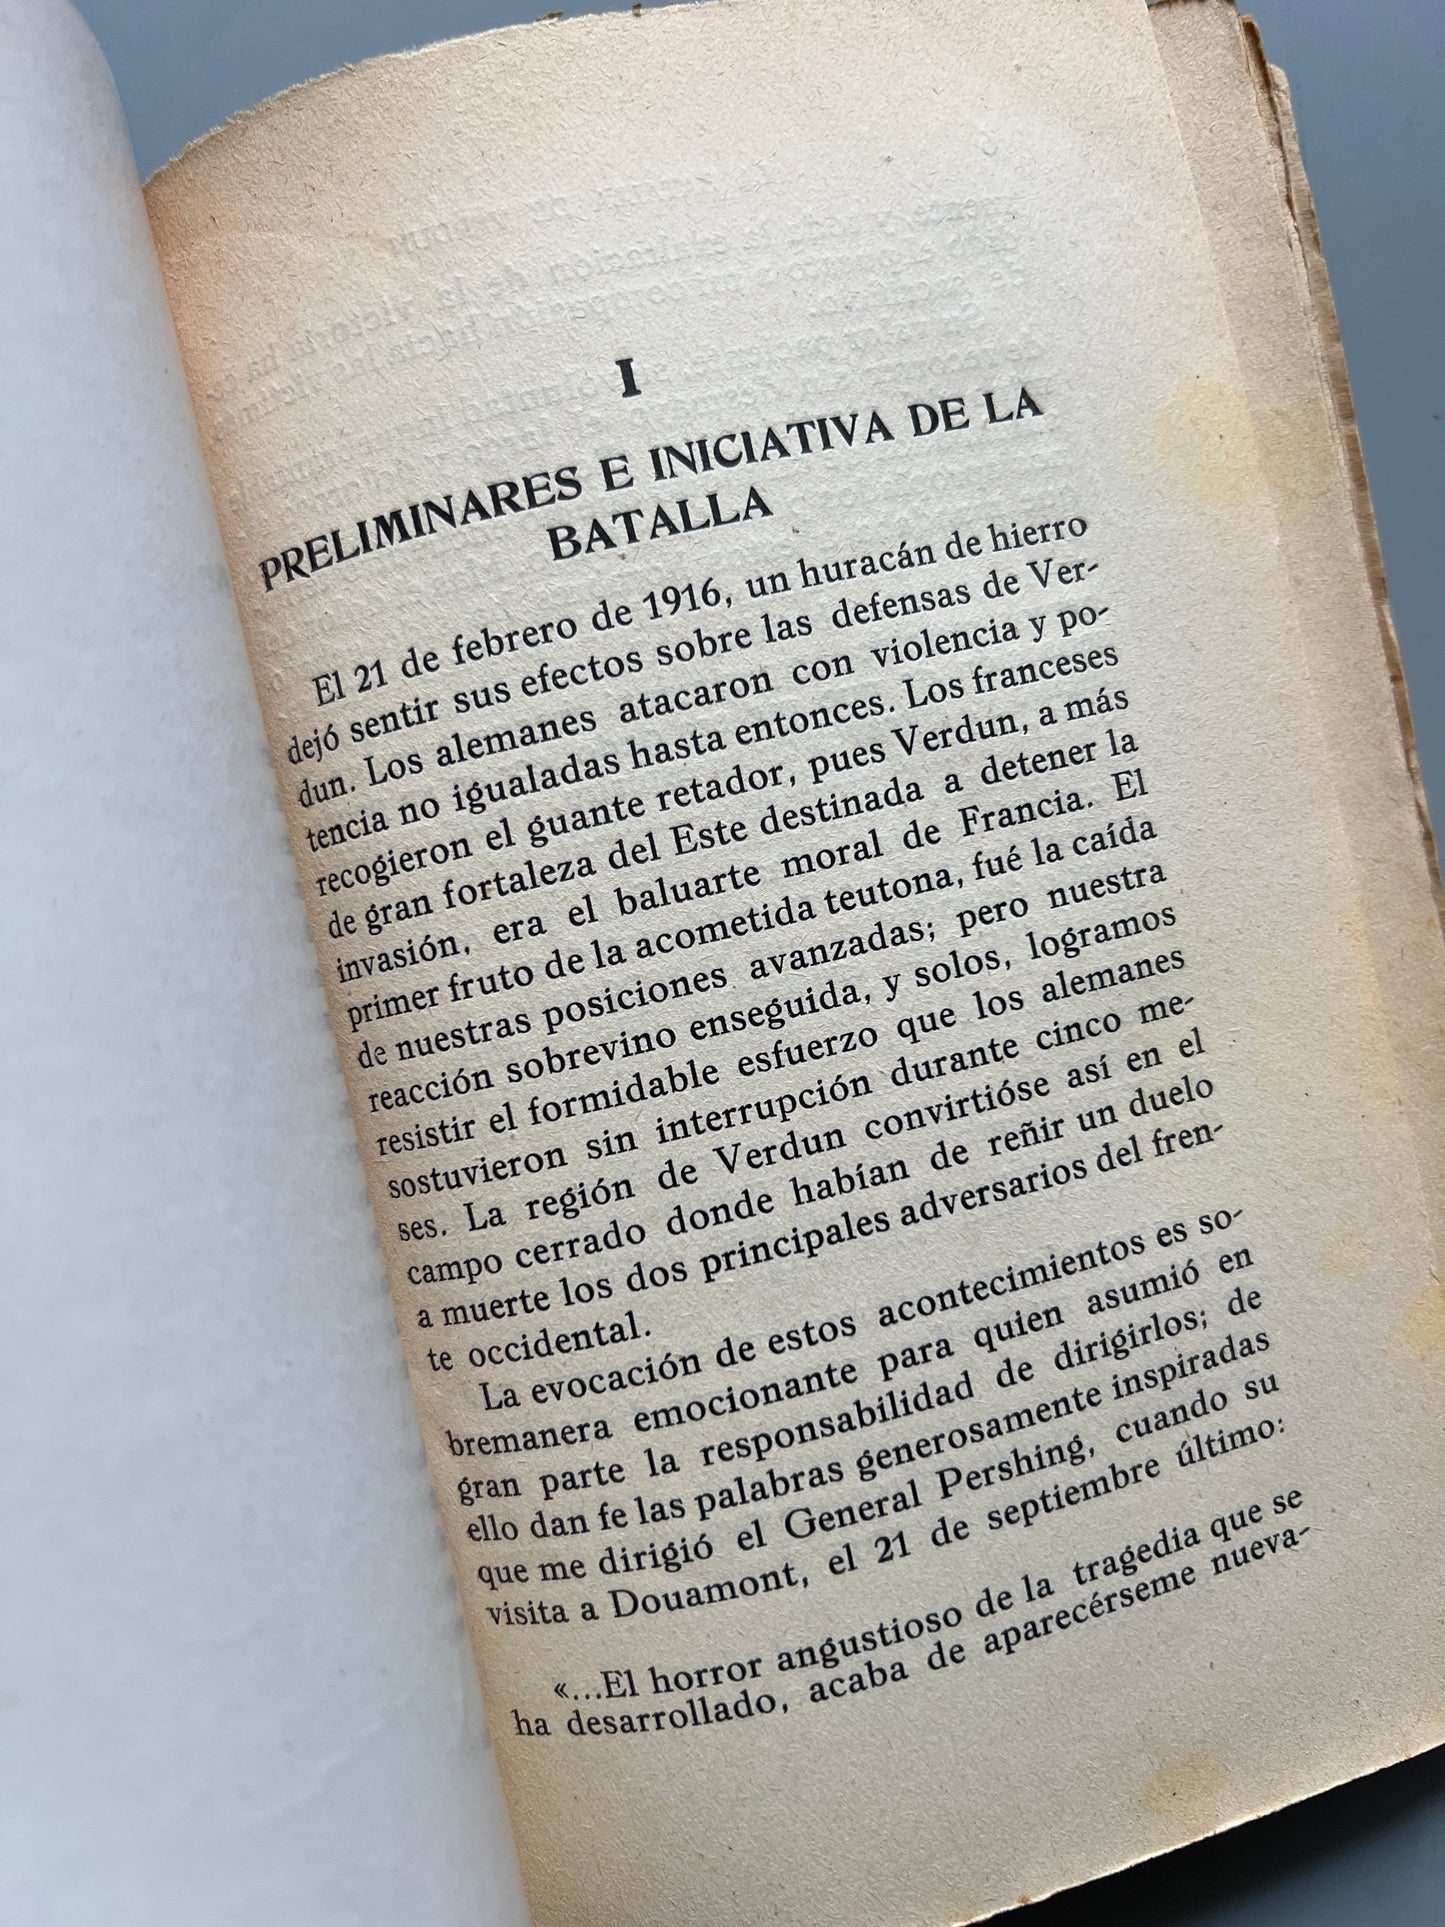 La batalla de Verdún, Mariscal Pétain - Colección Bibliográfica Militar, 1933